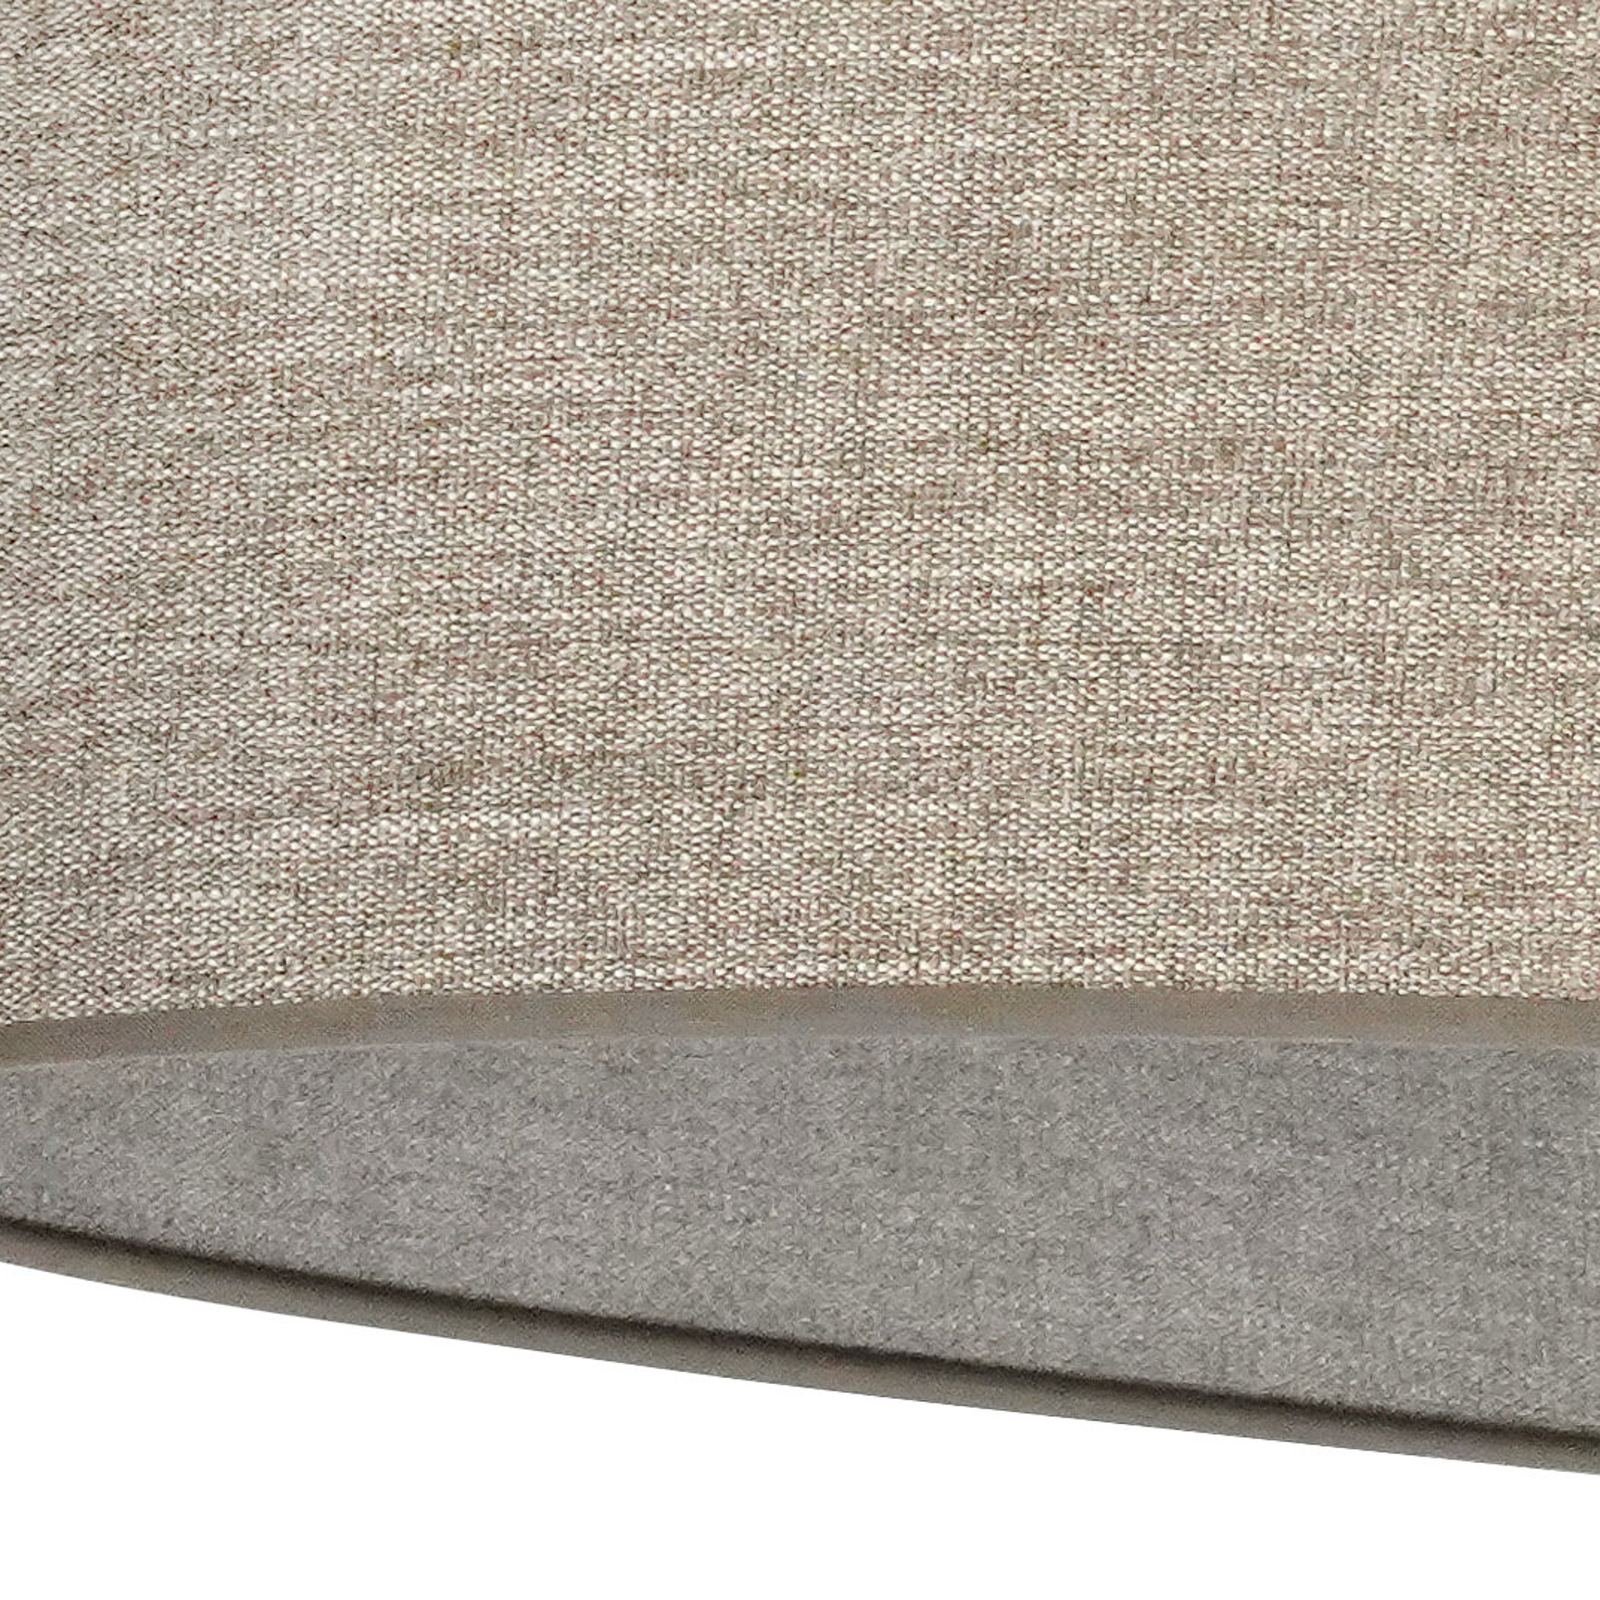 Euluna plafondlamp Celine, cappuccino, chenille stof, 80 cm